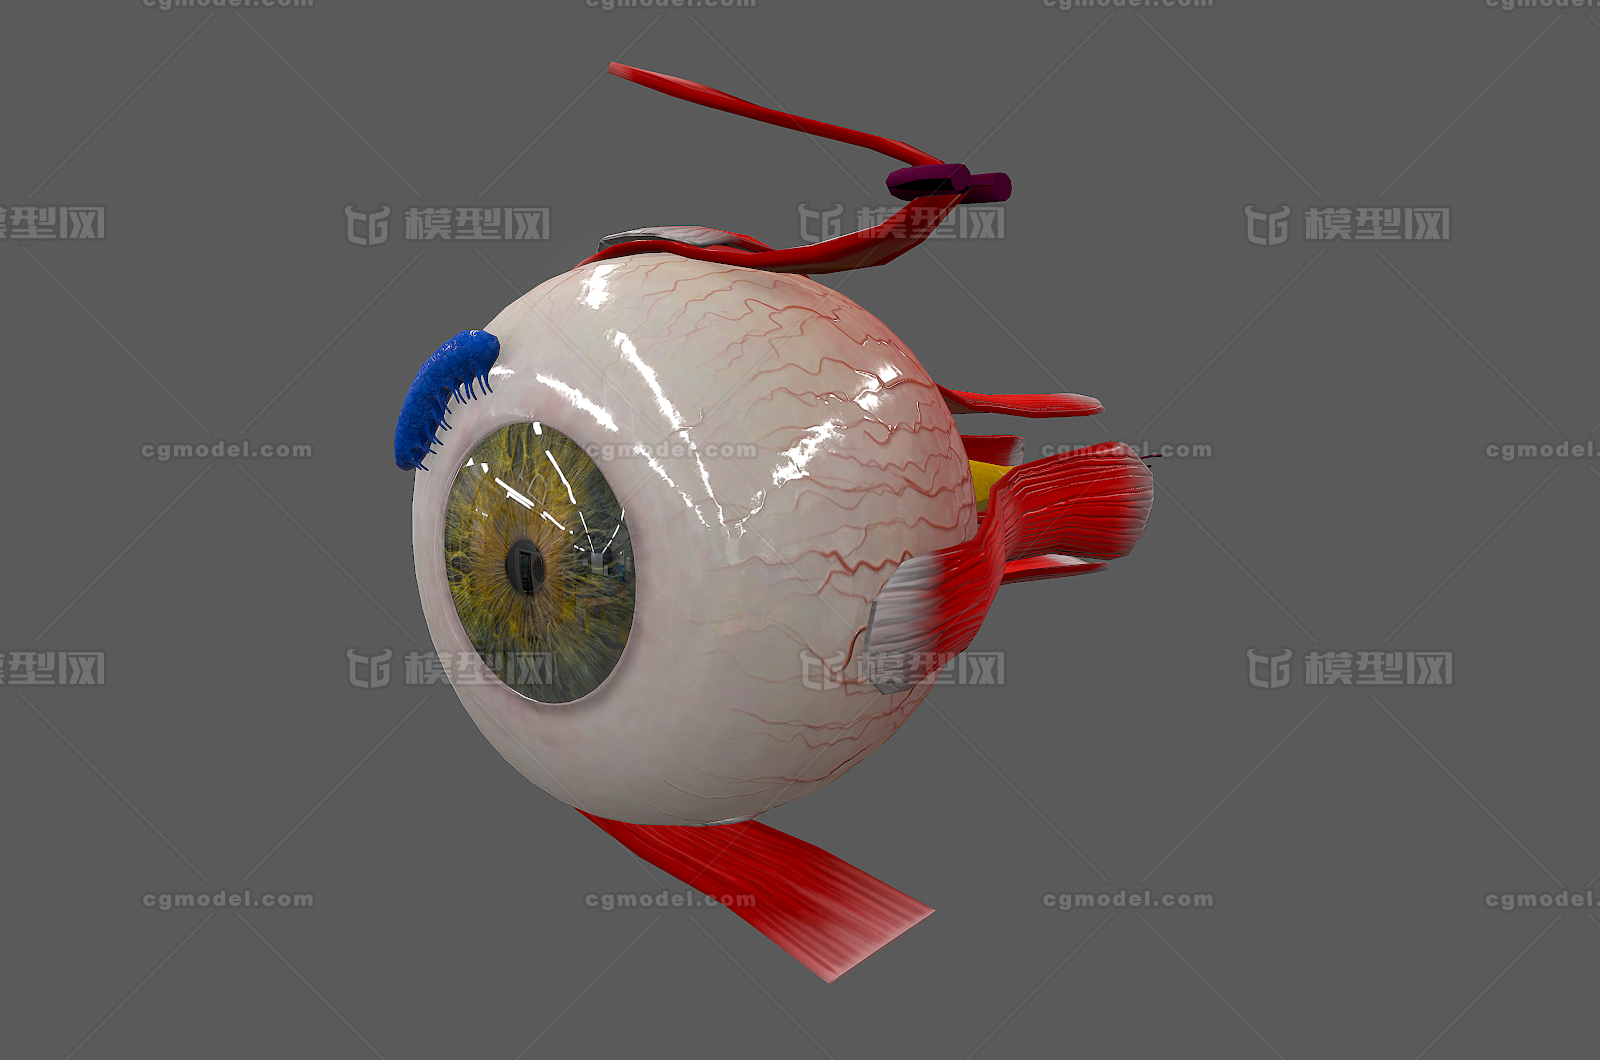 122 pbr次世代 眼球剖面 眼解剖 医疗解剖模型  眼珠 眼睛结构 医疗